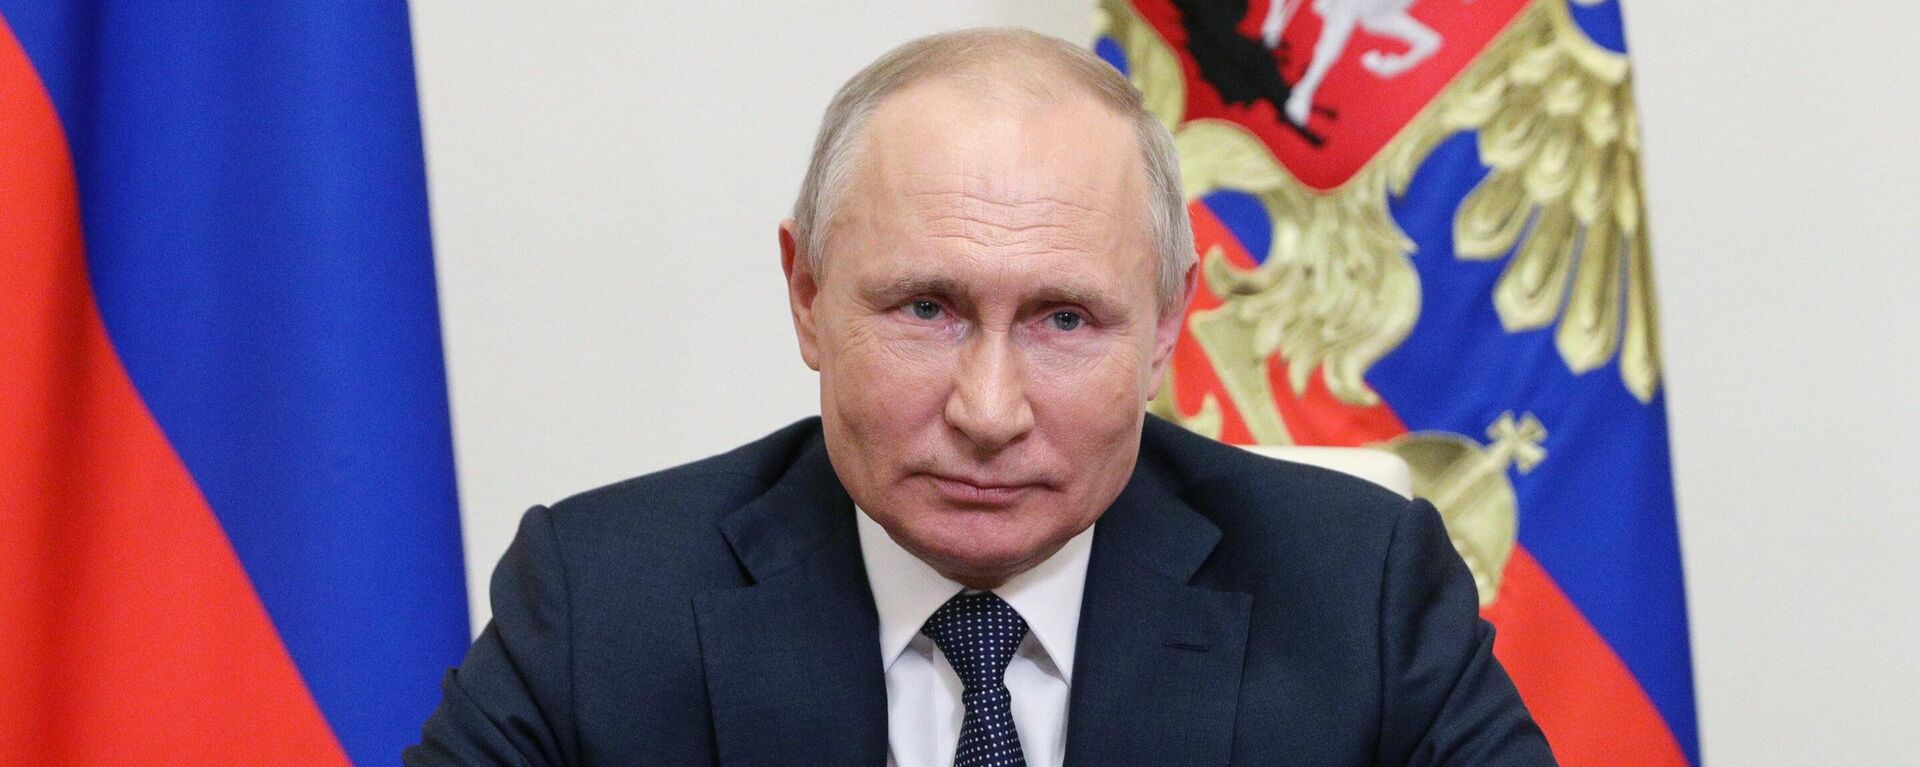 Vladímir Putin, presidente de Rusia - Sputnik Mundo, 1920, 25.05.2021